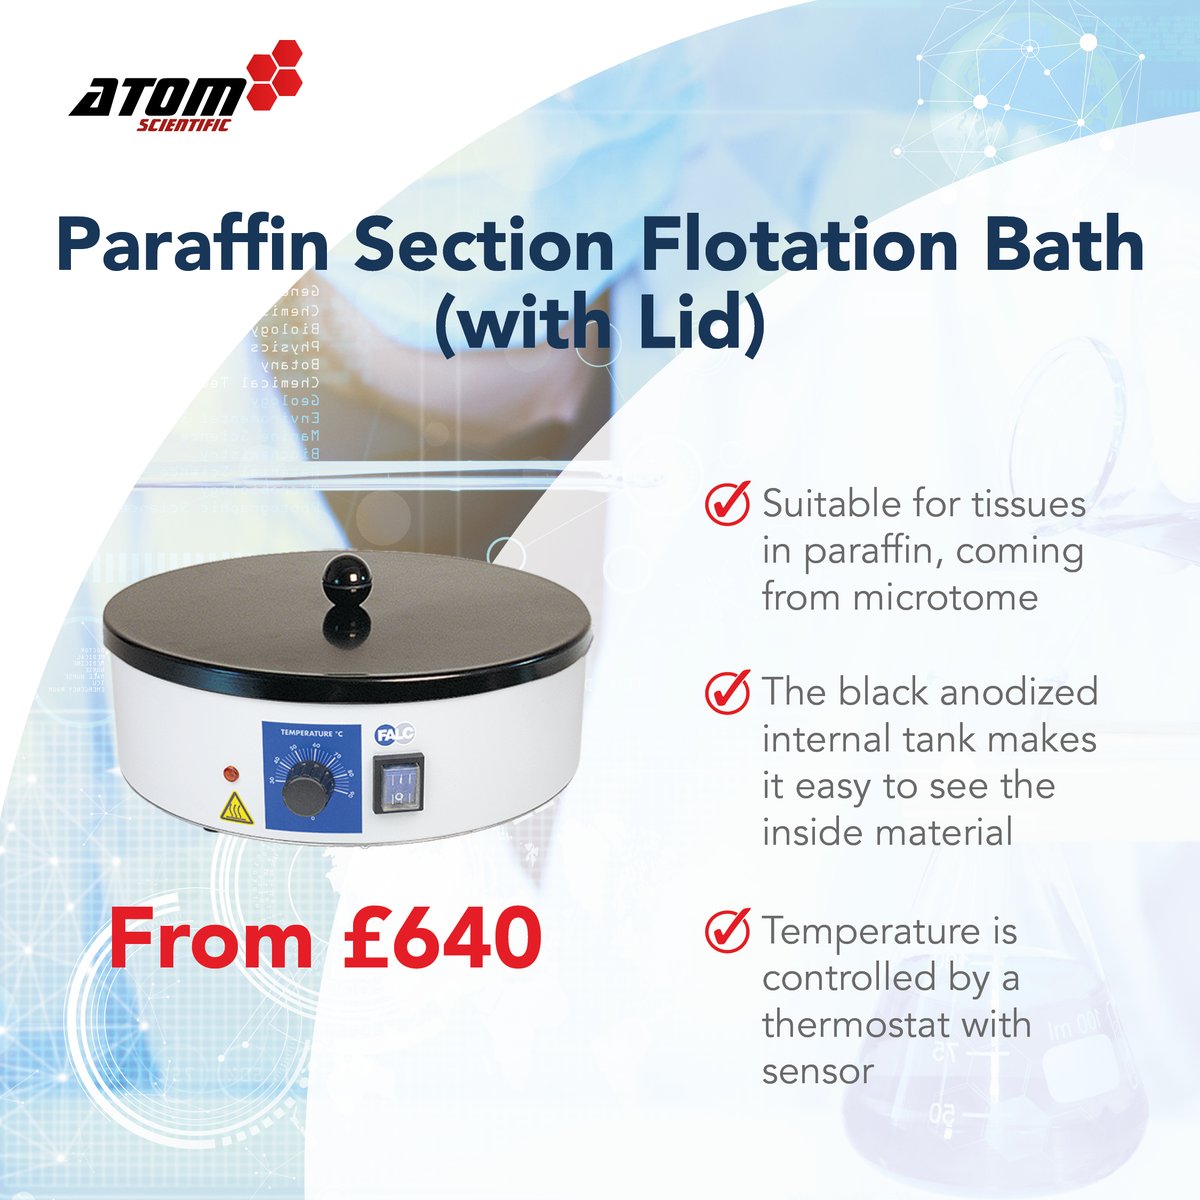 Paraffin Section Flotation Bath

Explore today...
eu1.hubs.ly/H091cP20

#laboratoryequipment #laboratory #histology #nhs #histologywaterbath #flotationbathhistology